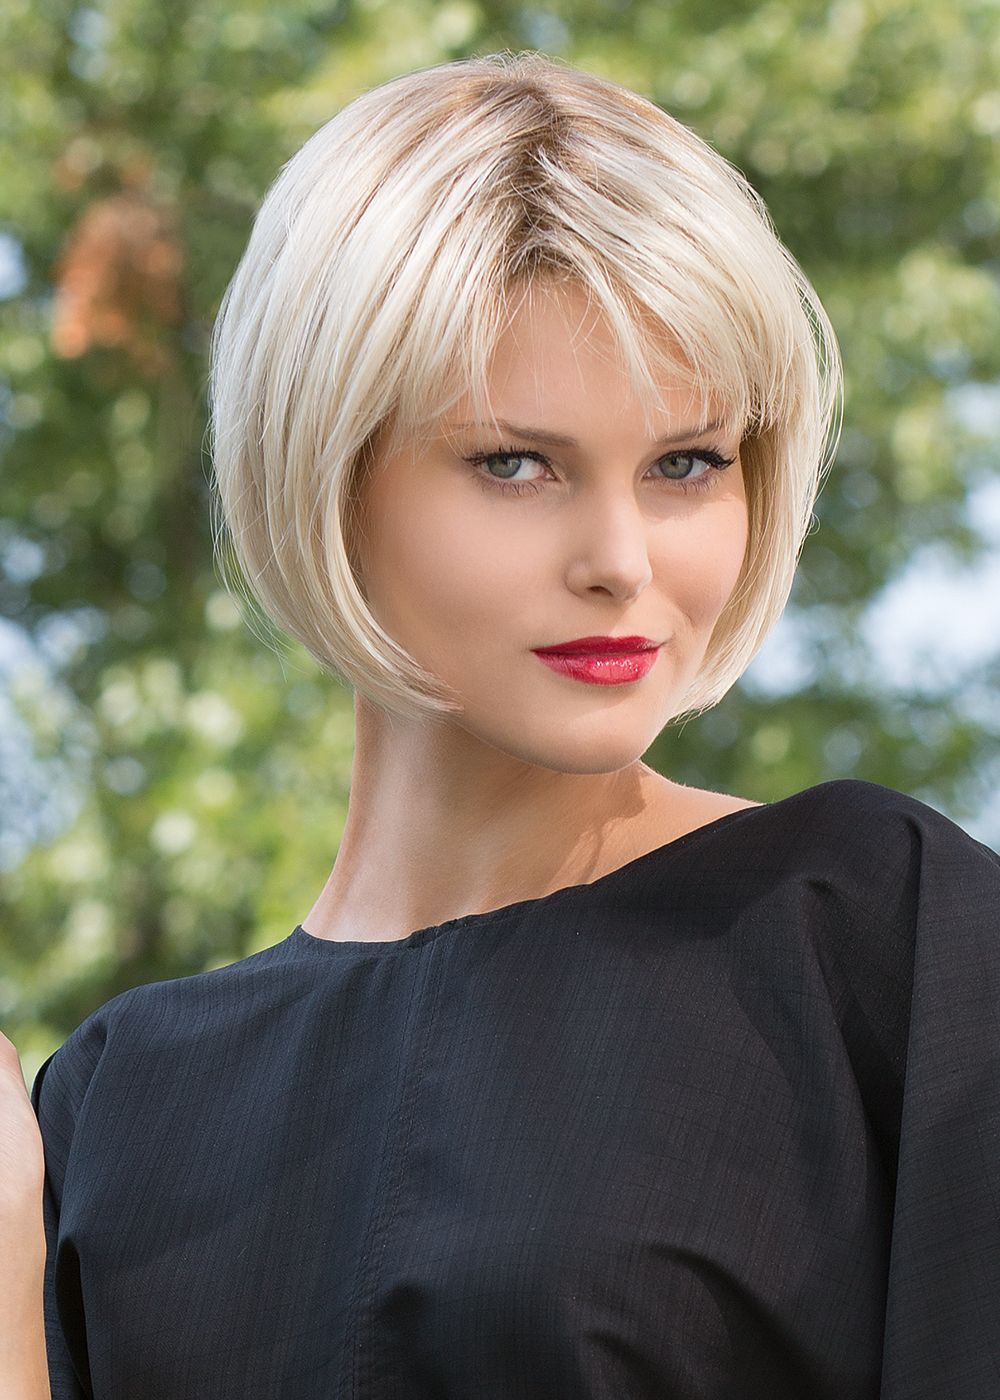 Platinum Blonde. 4 Top 10 Hair Color Trends for Blonde Women - 16